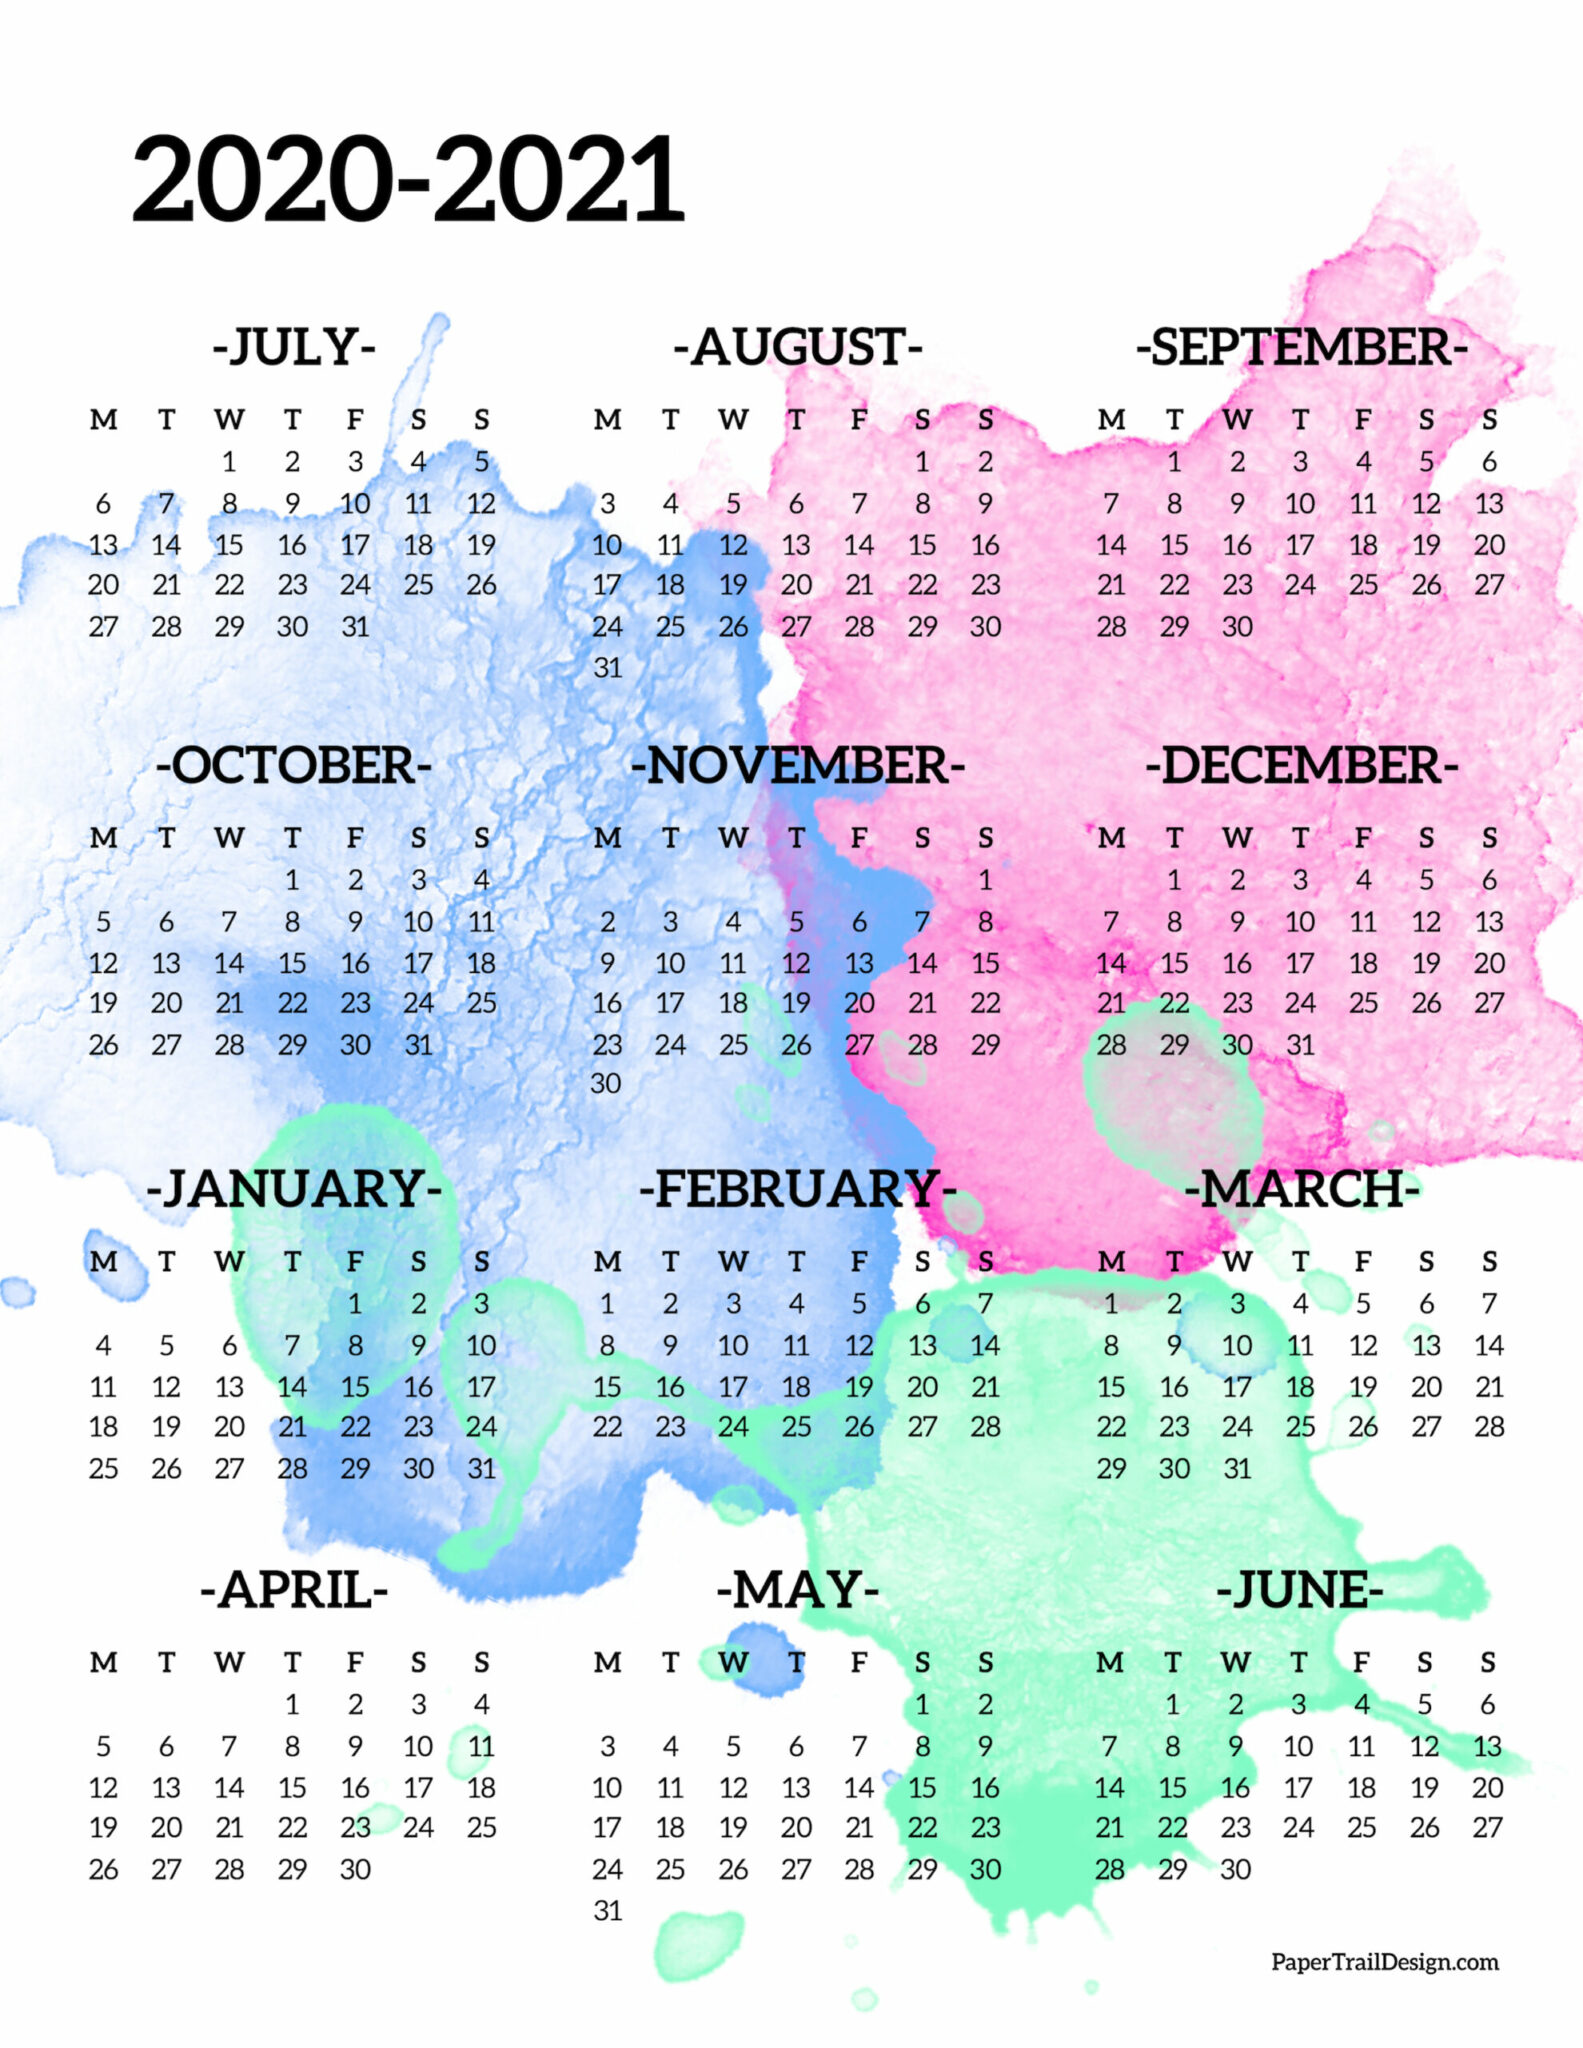 2020-2021 School Year Calendar Free Printable - Paper Trail Design